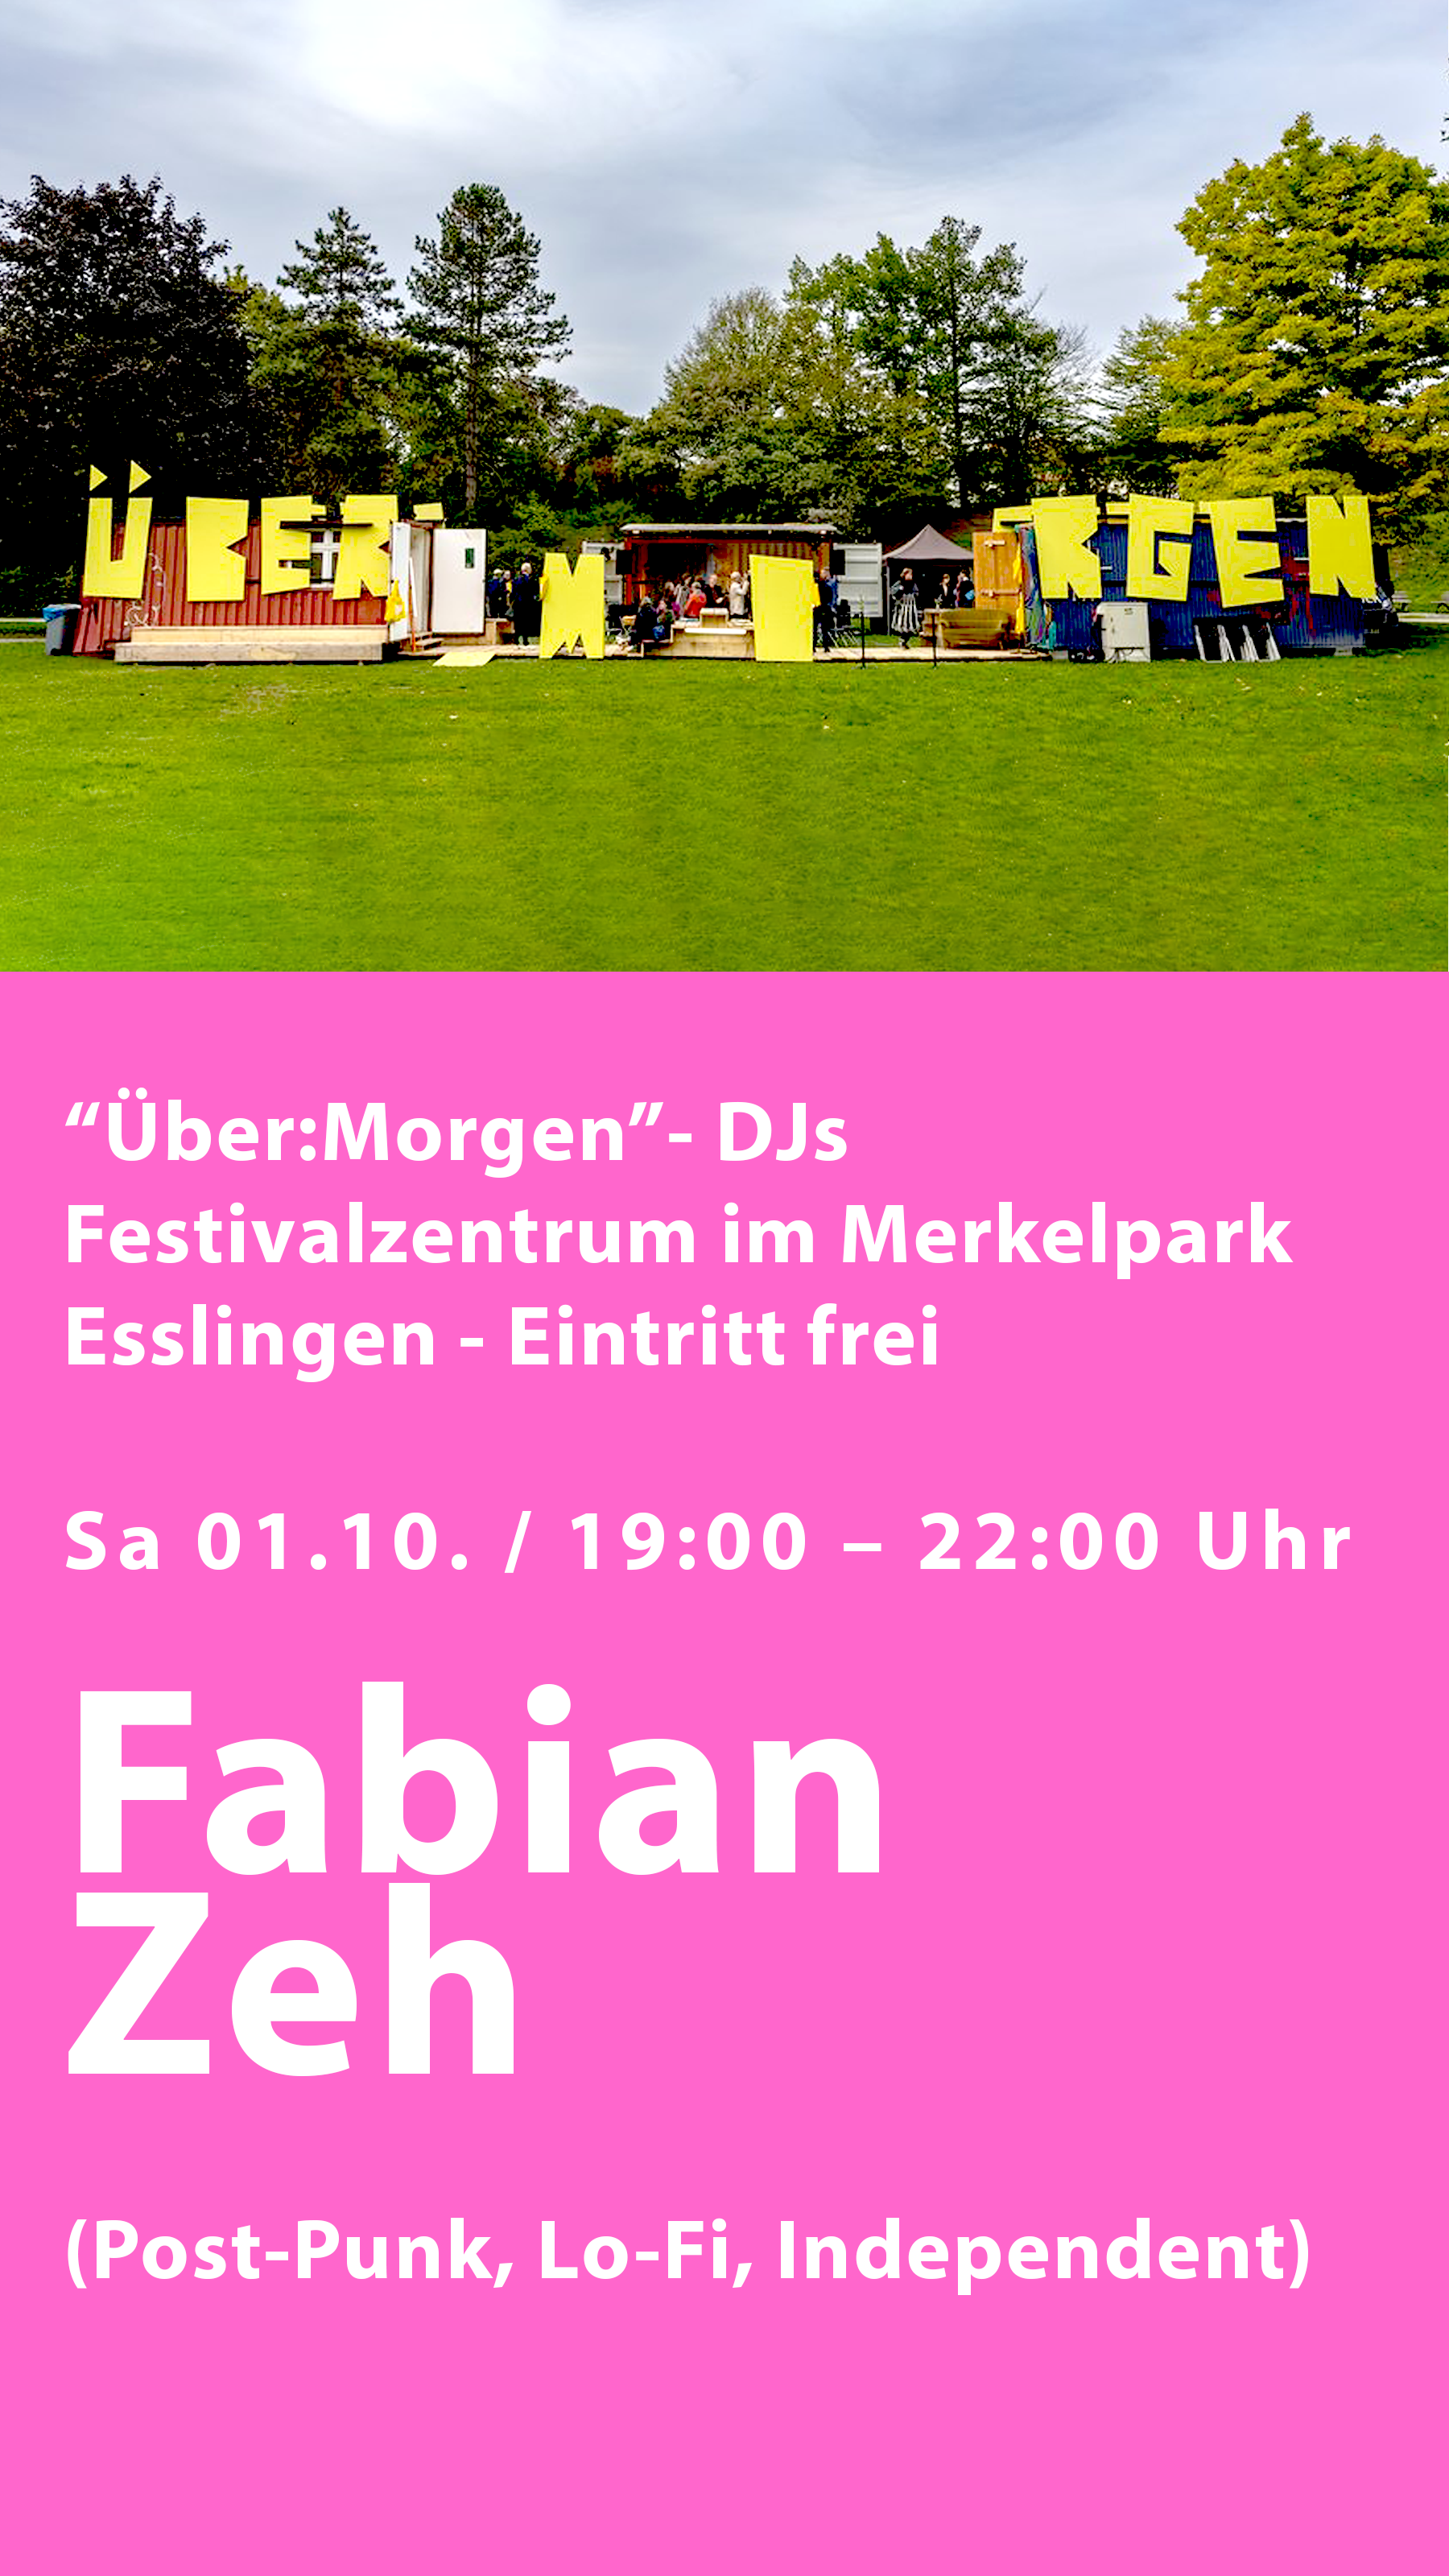 DJ Fabian Über Morgen